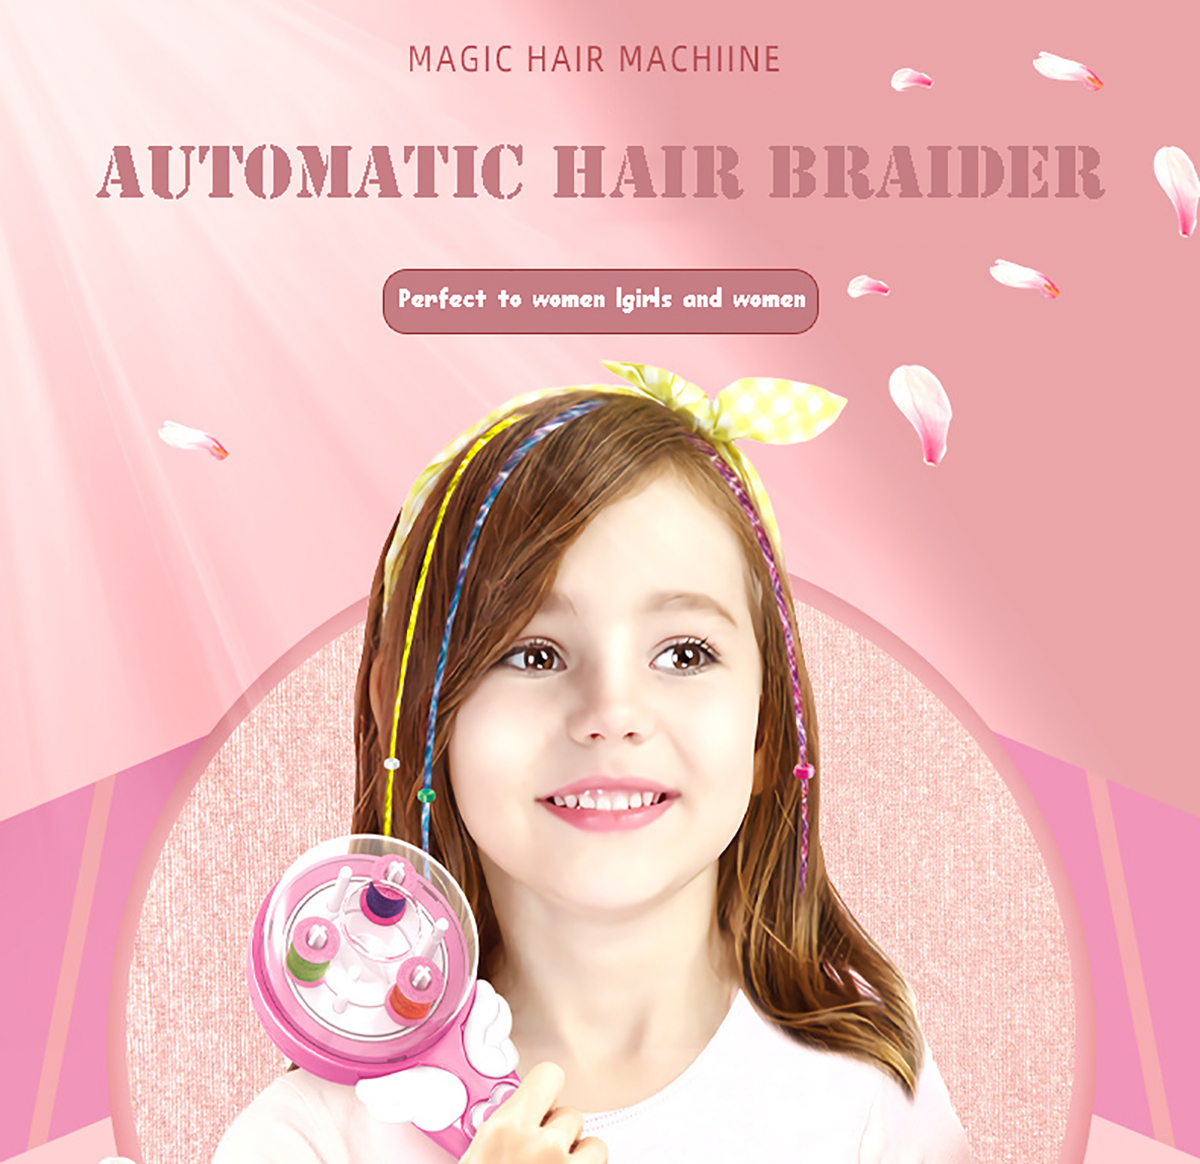 Electric-Automatic-Hair-Braider-DIY-Magic-Hair-Braiding-Machine-Hair-Styling-Toys-for-Girls-Gift-1726977-4